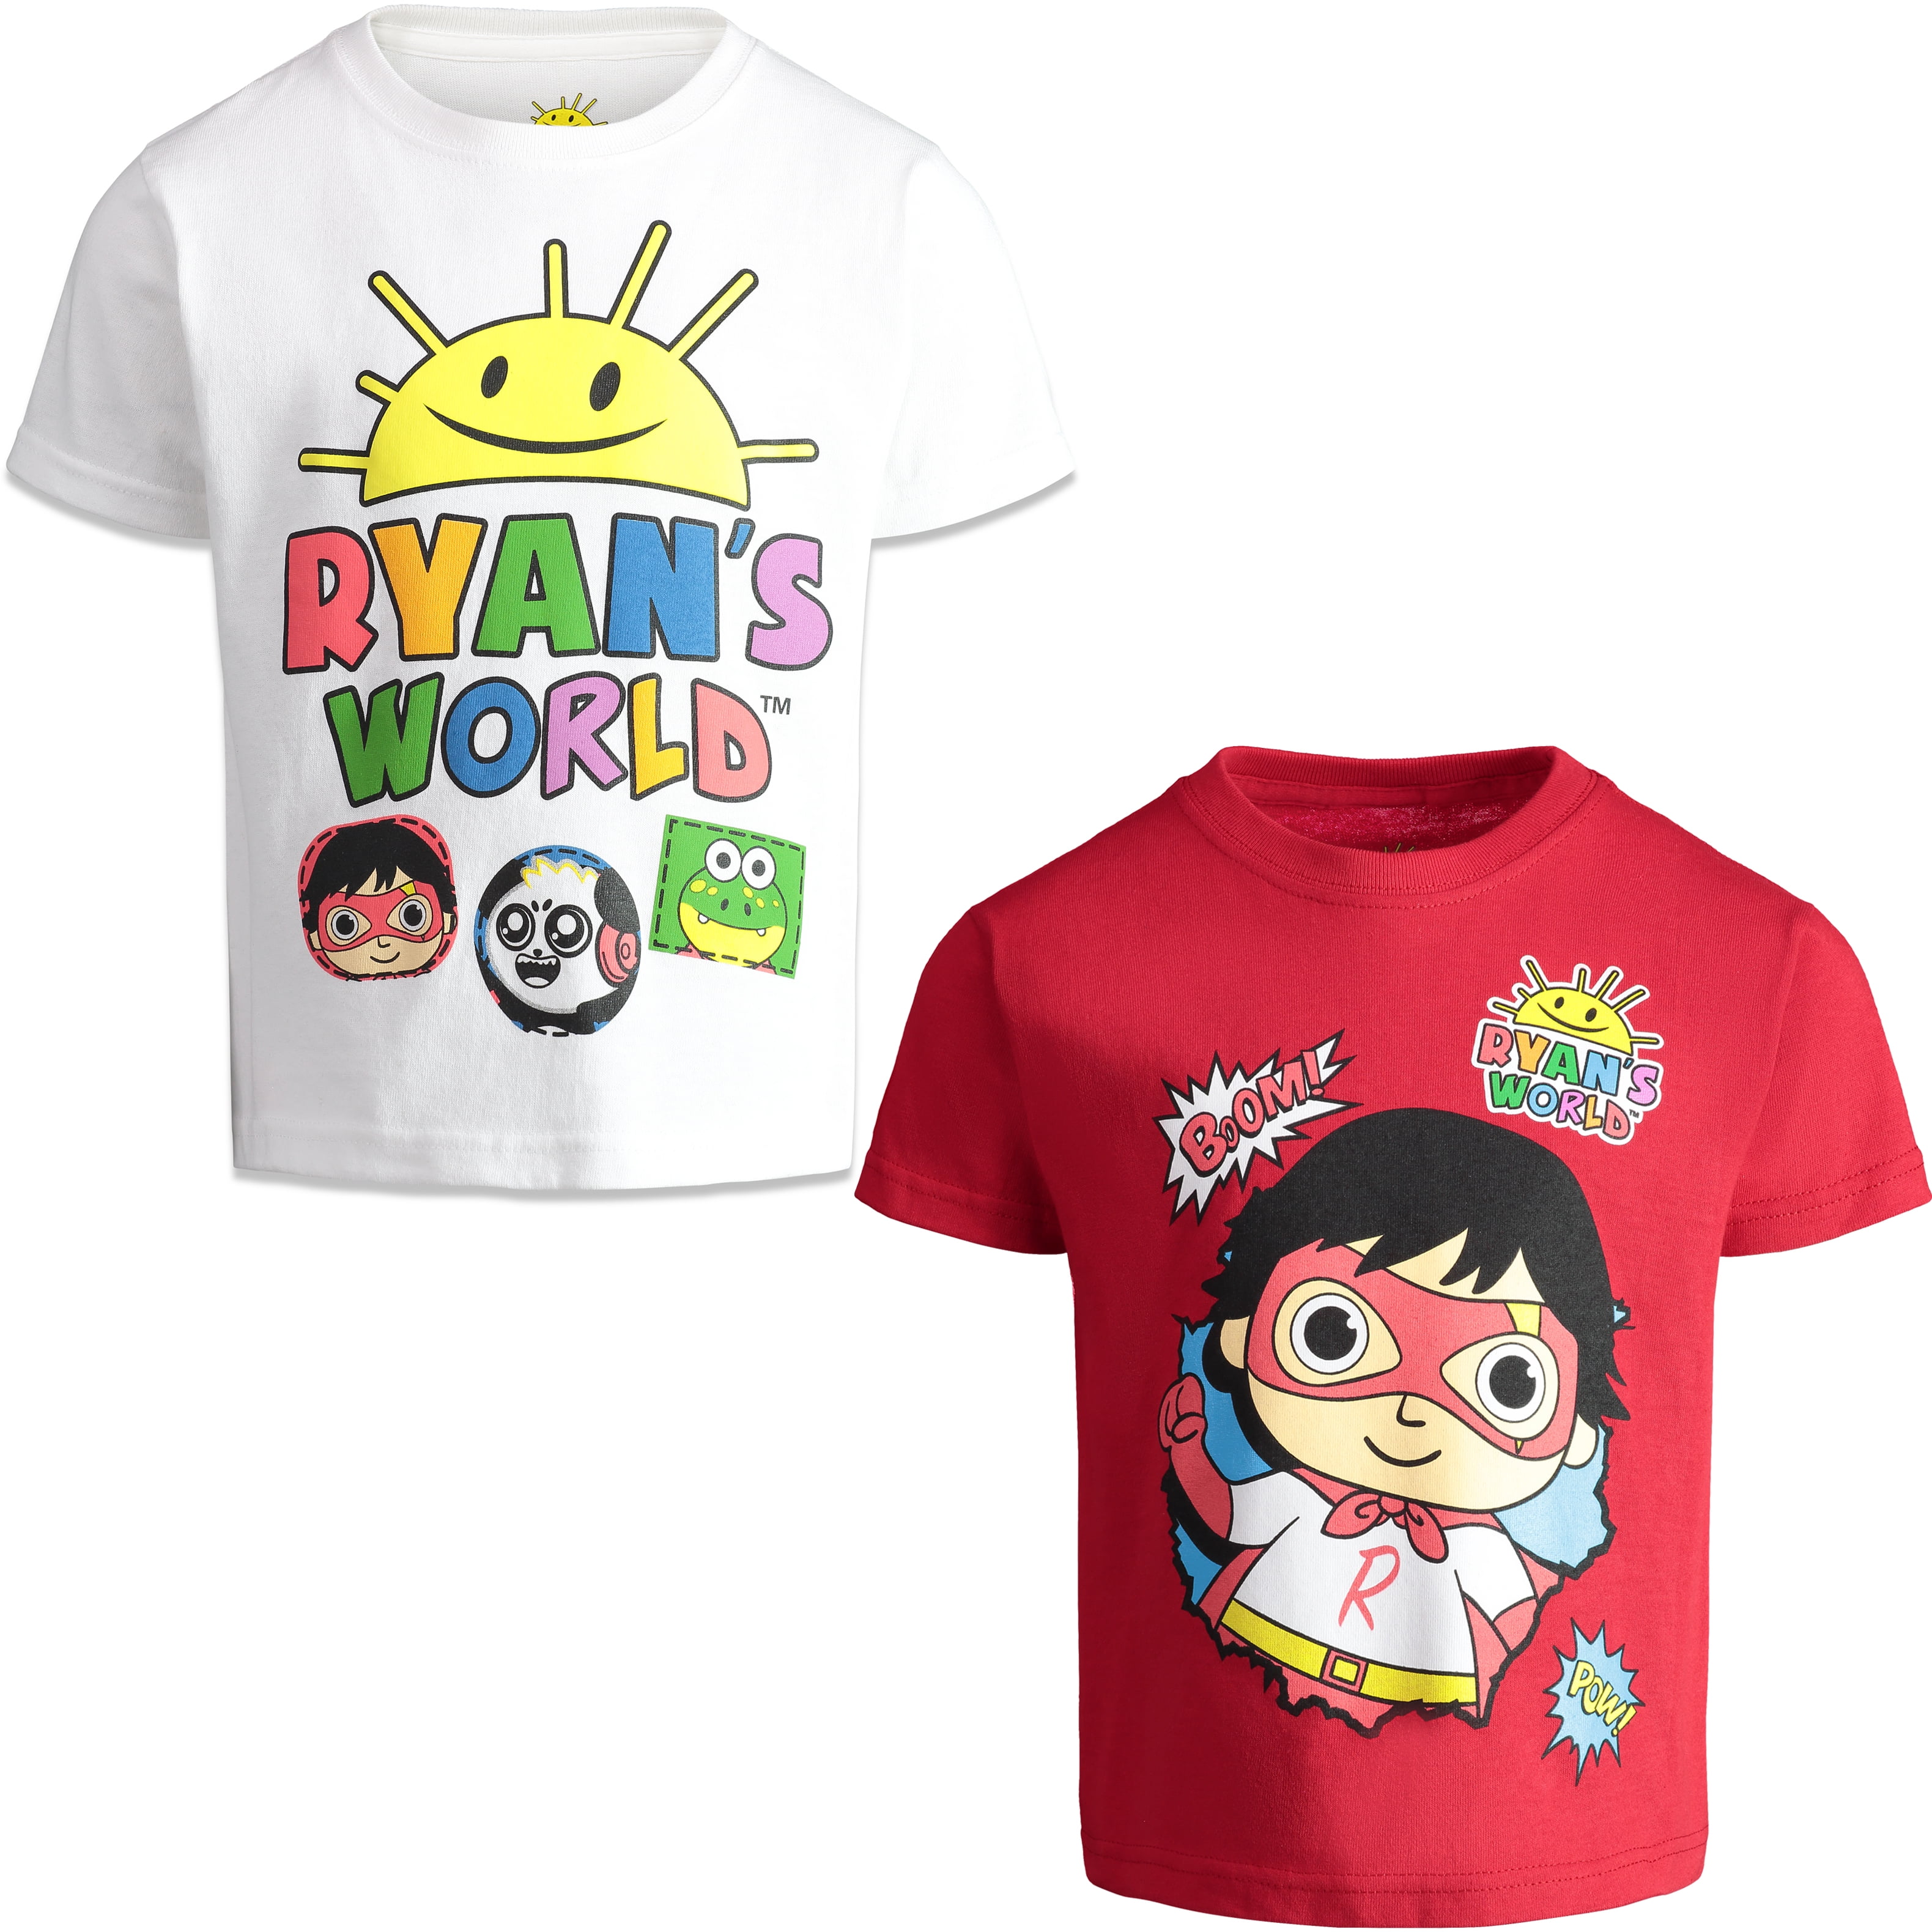 Ryans Toys Review World T Shirt Girls Boys Kids Birthday Gift Present Top-503YR 